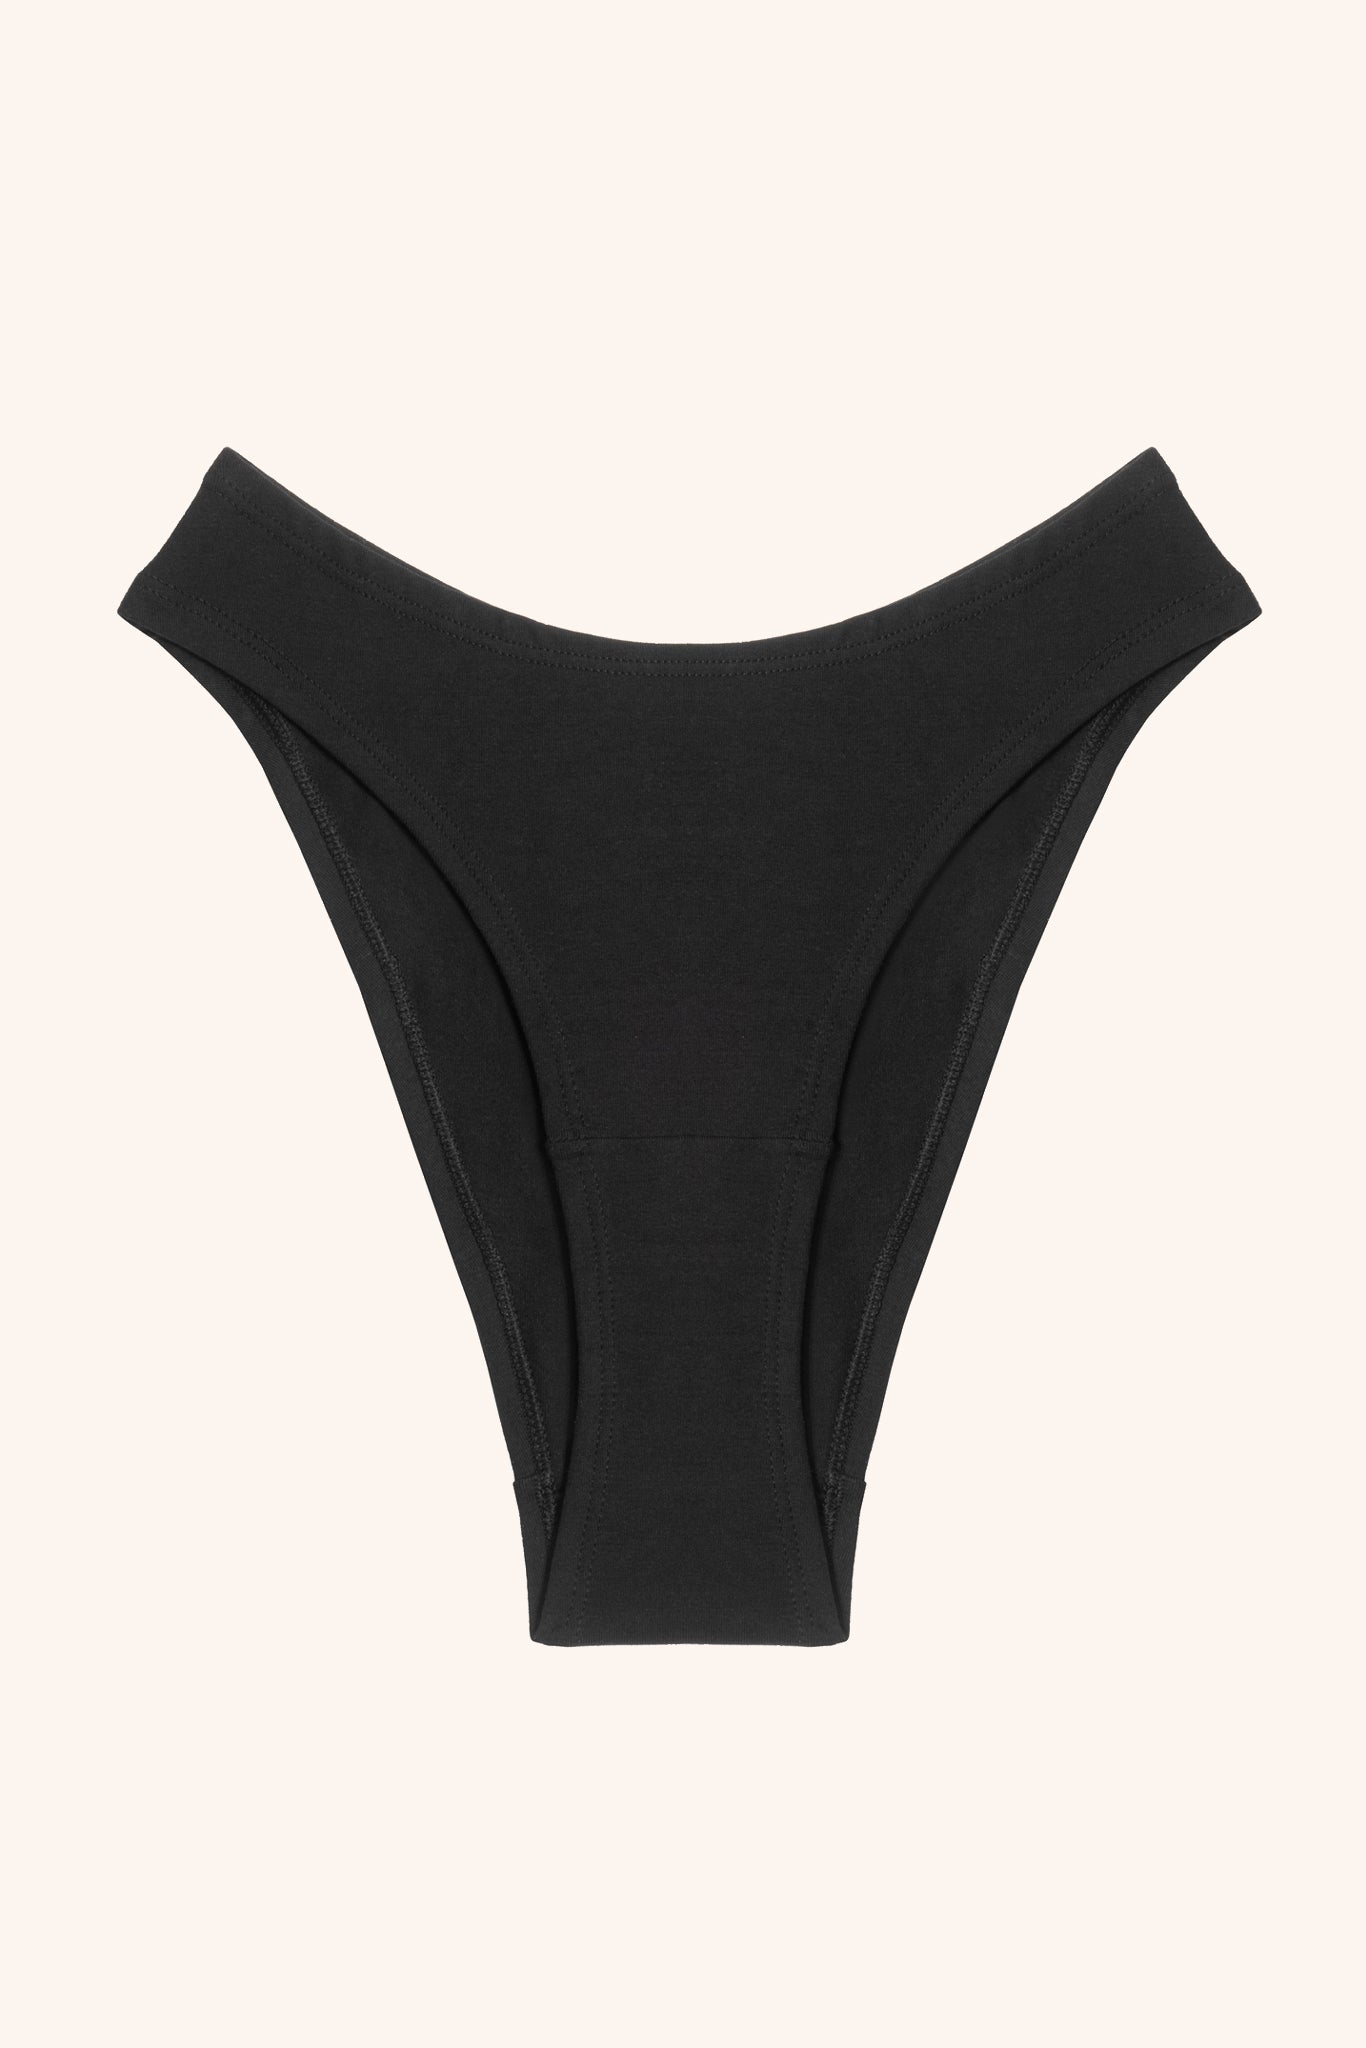 stylish Black Thong Panty For Women